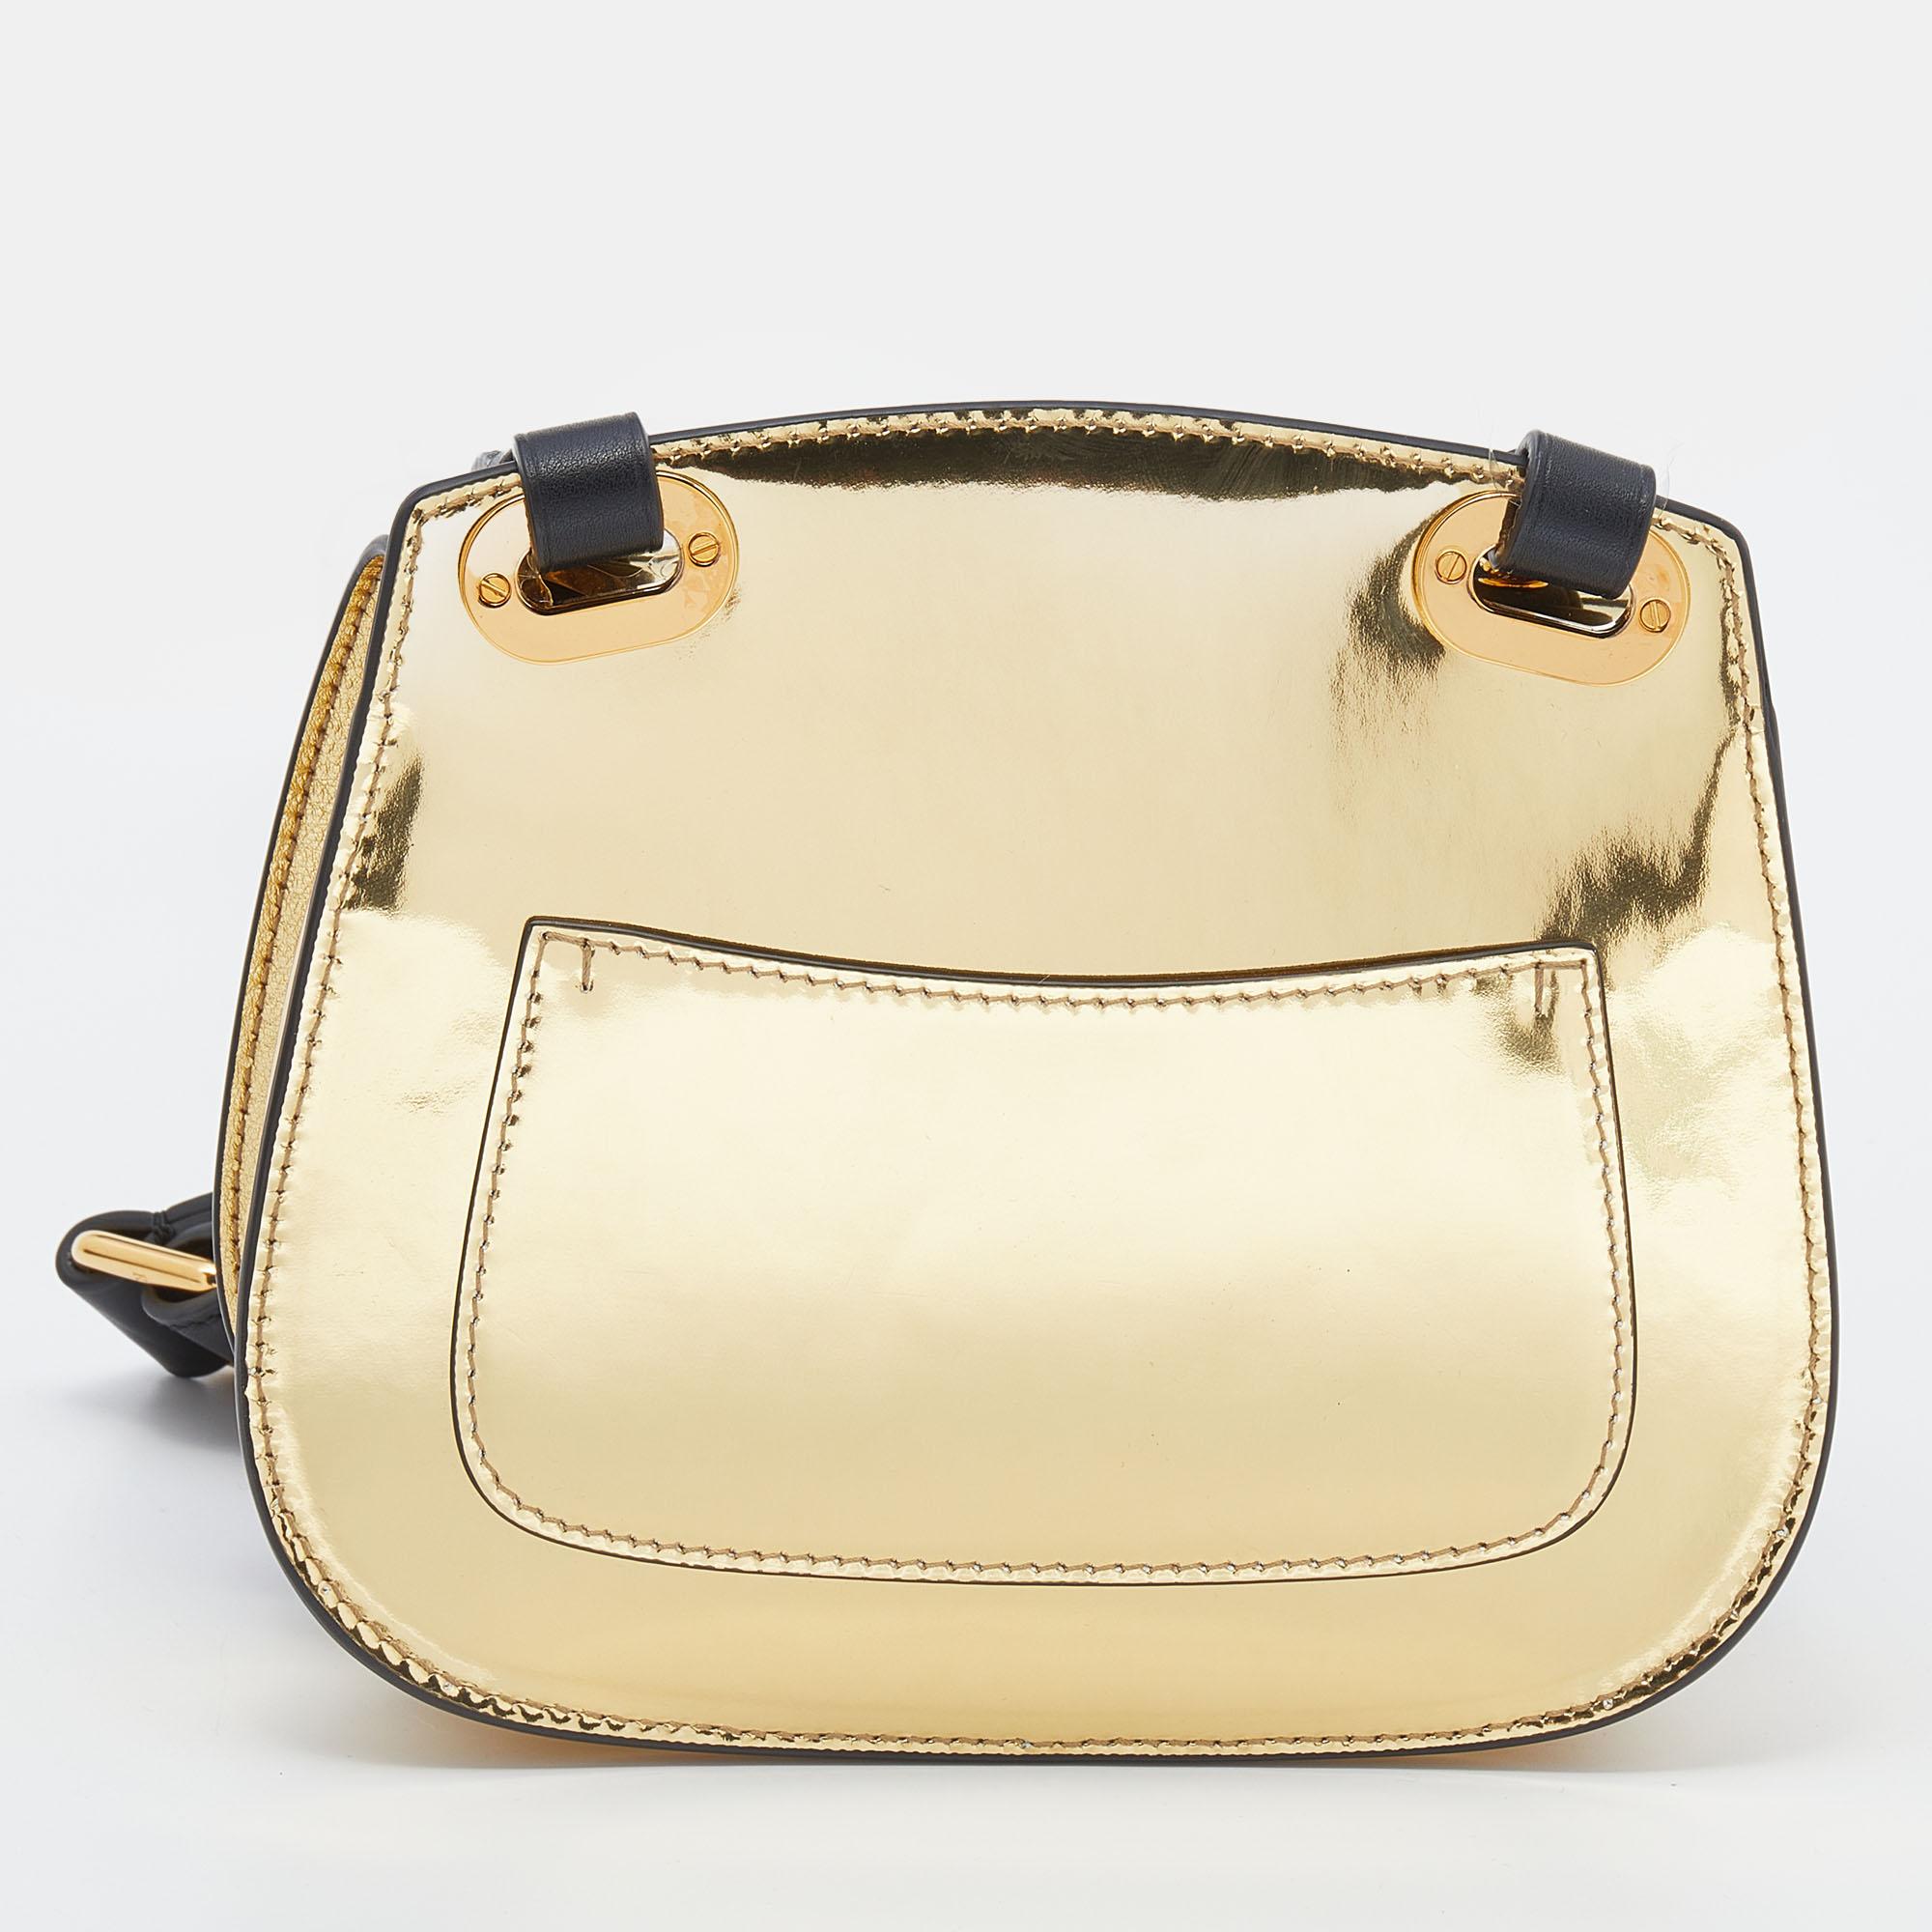 Ralph Lauren Leather Bag - 6 For Sale on 1stDibs